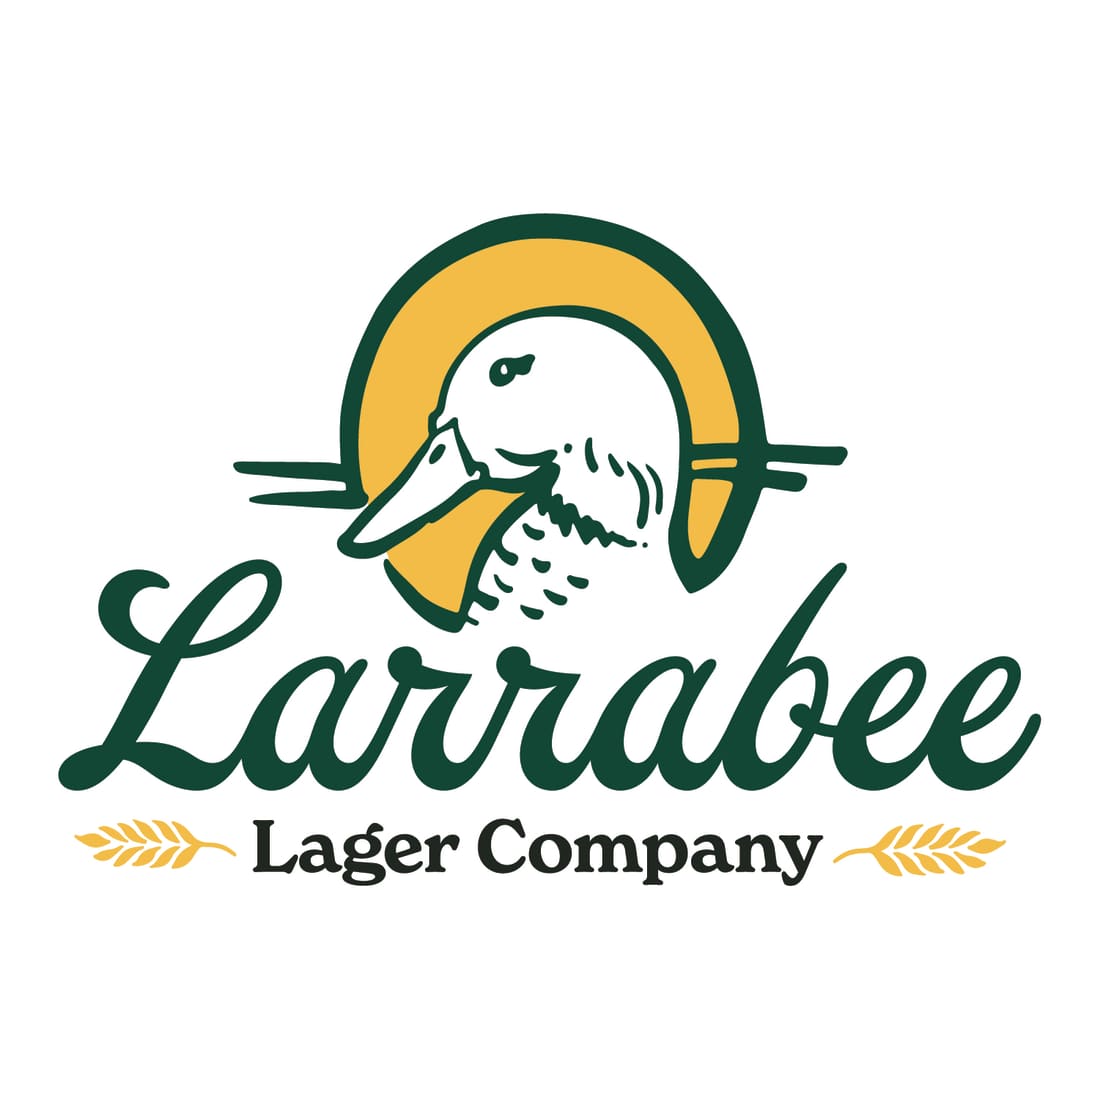 Larrabee Lager Co. background image